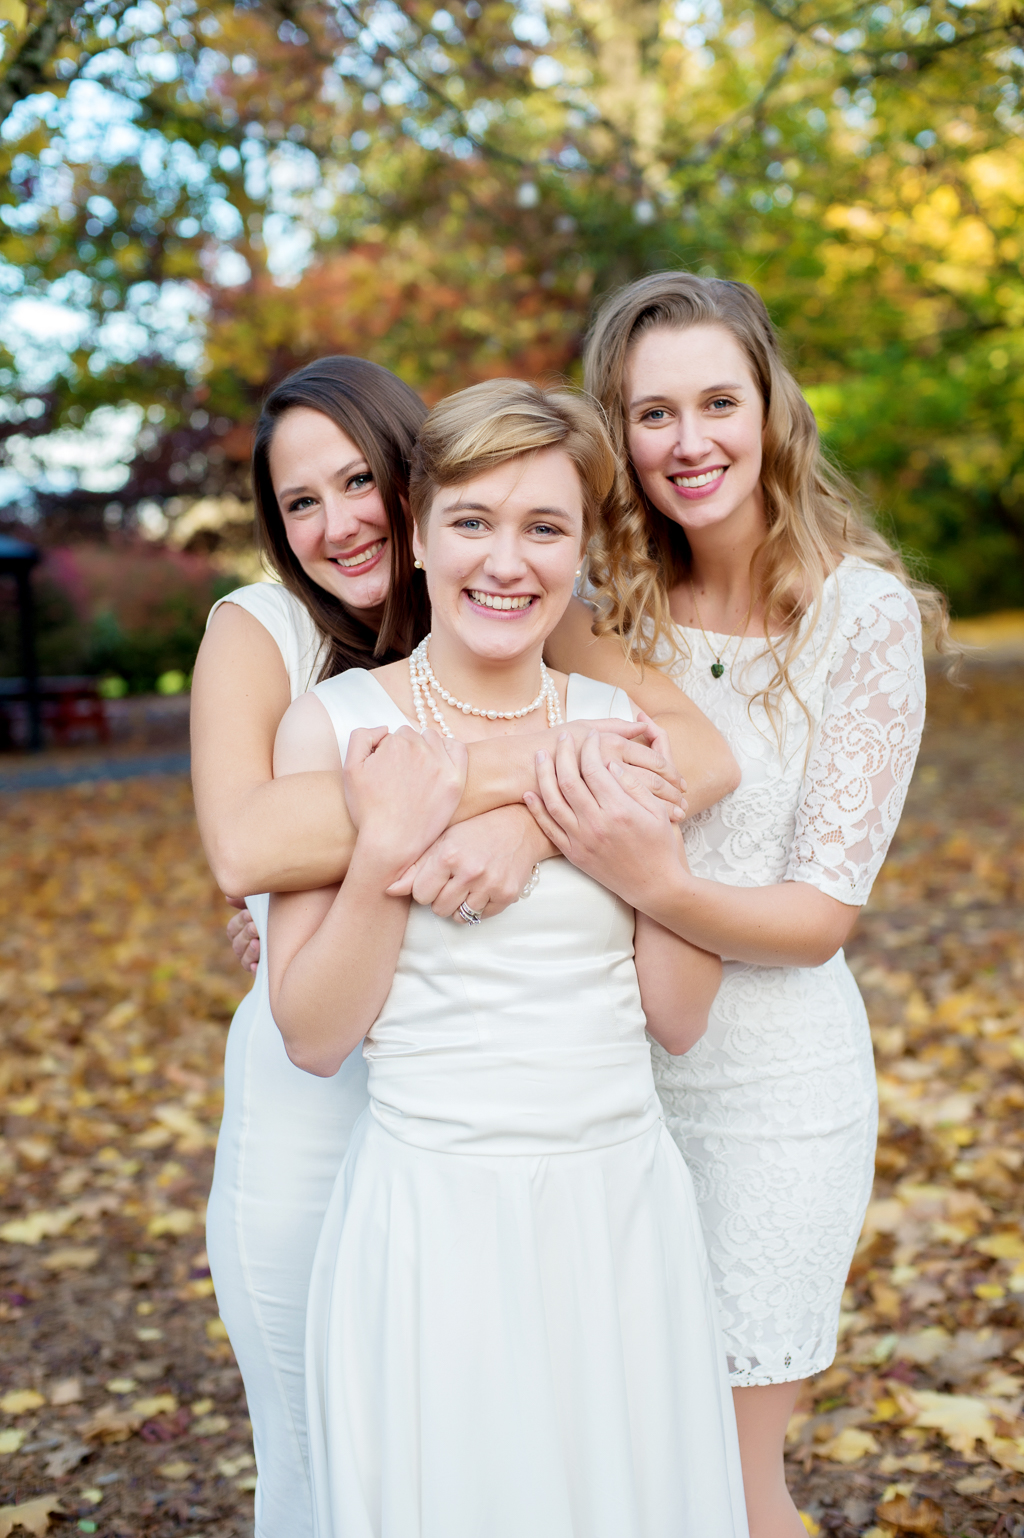 3 girls in white dresses hug in the autumn leaves